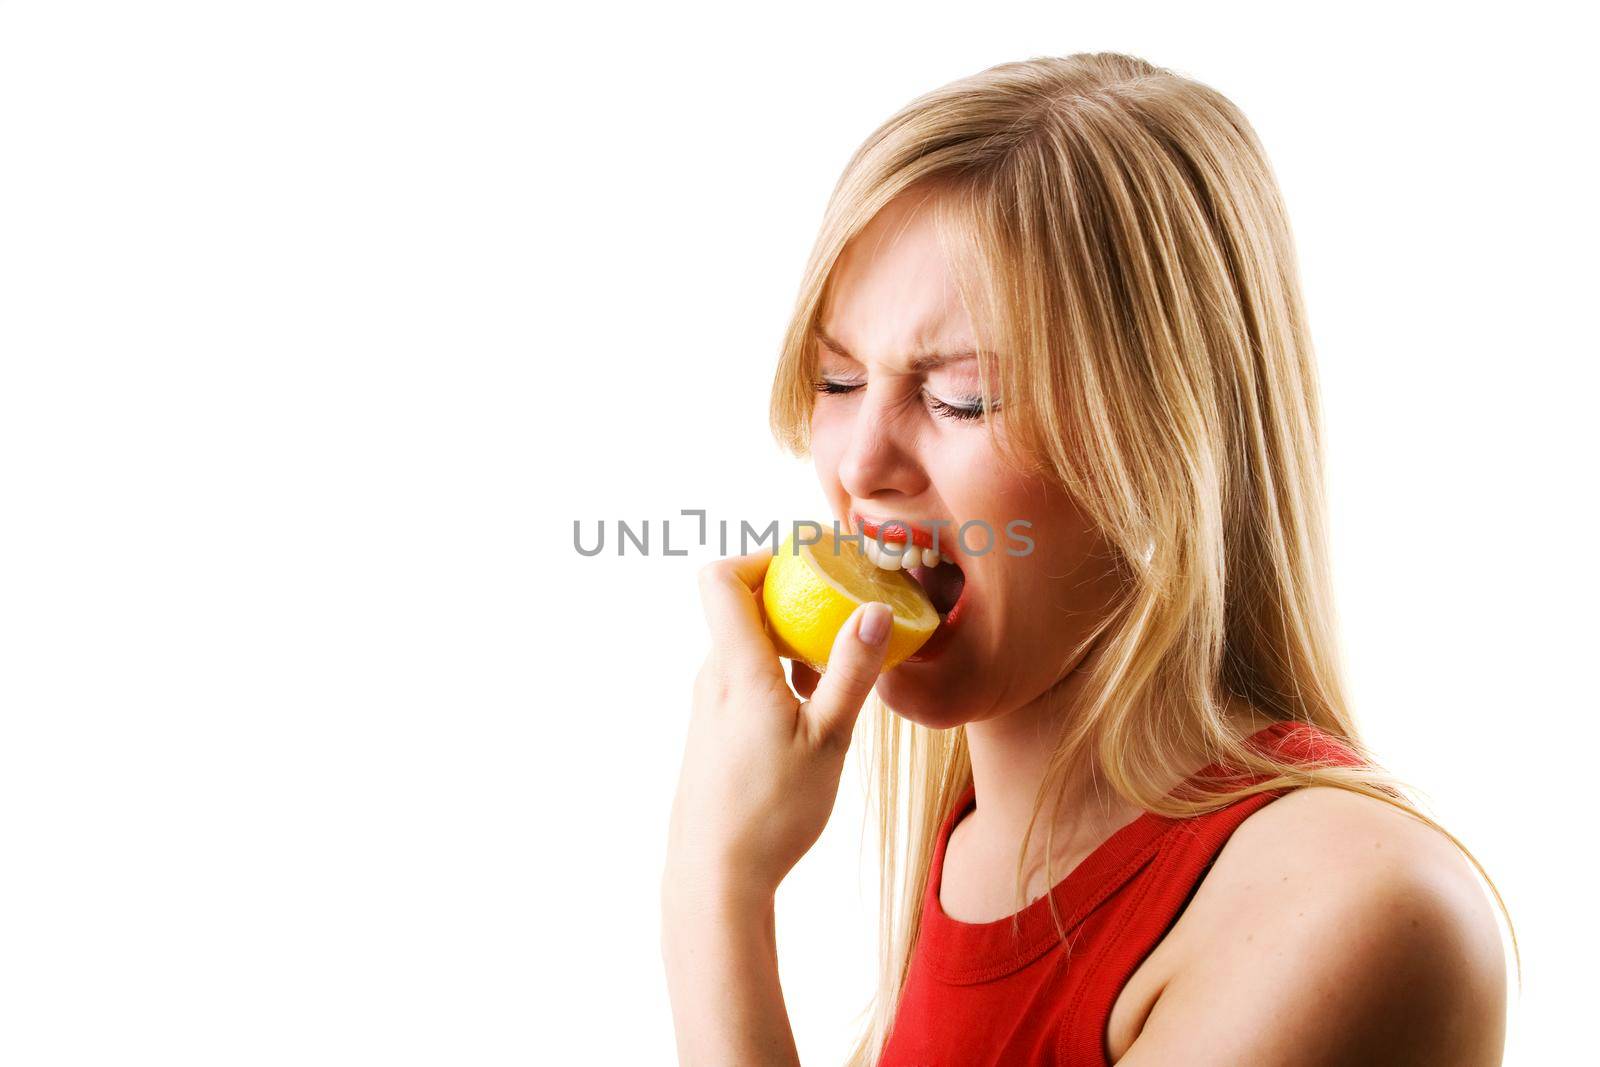 Woman having a nibble of a lemon making a grimace